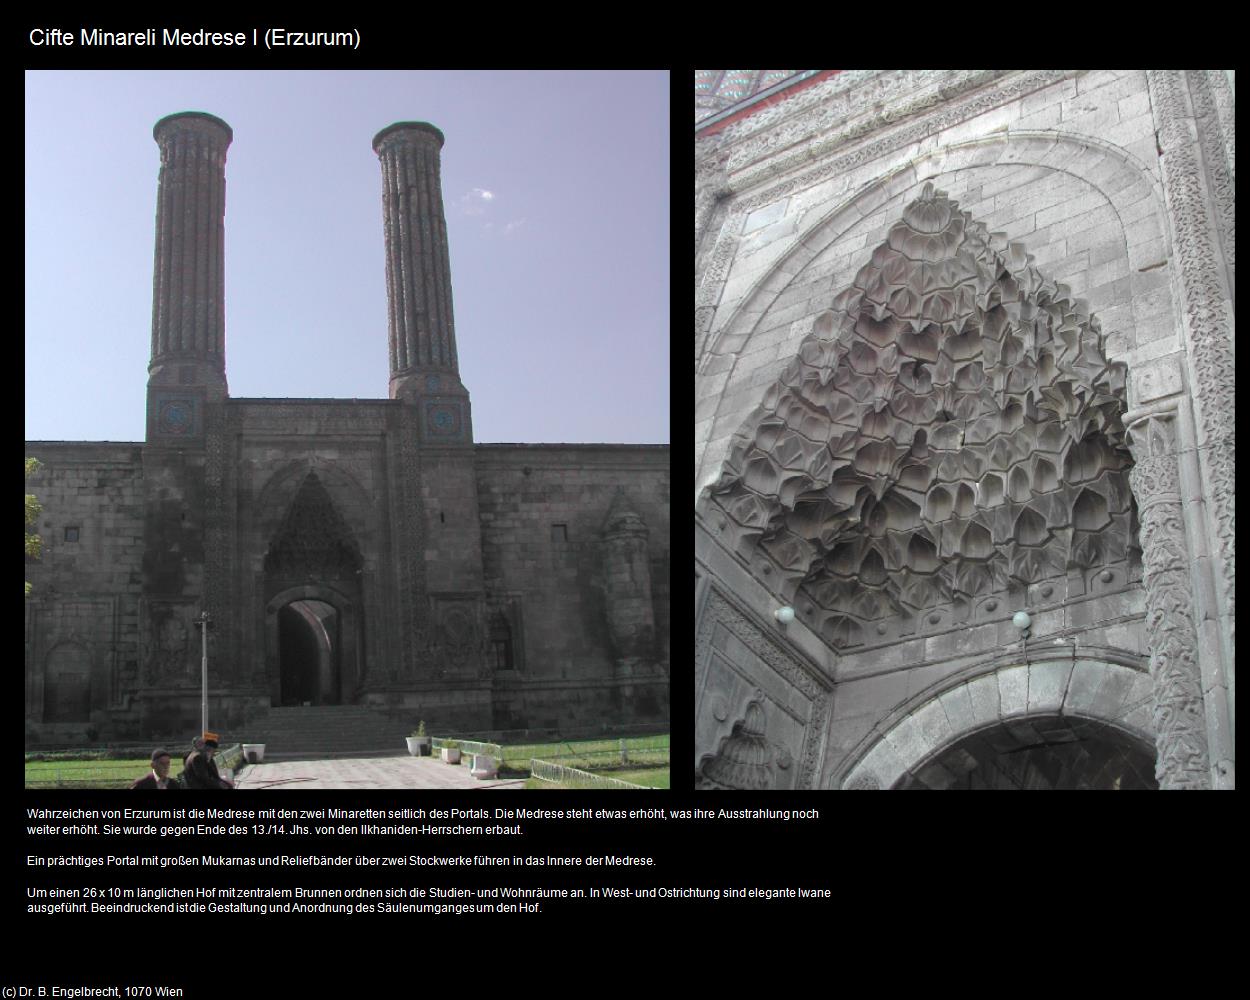 Cifte Minareli Medrese I (Erzurum) in TÜRKEI